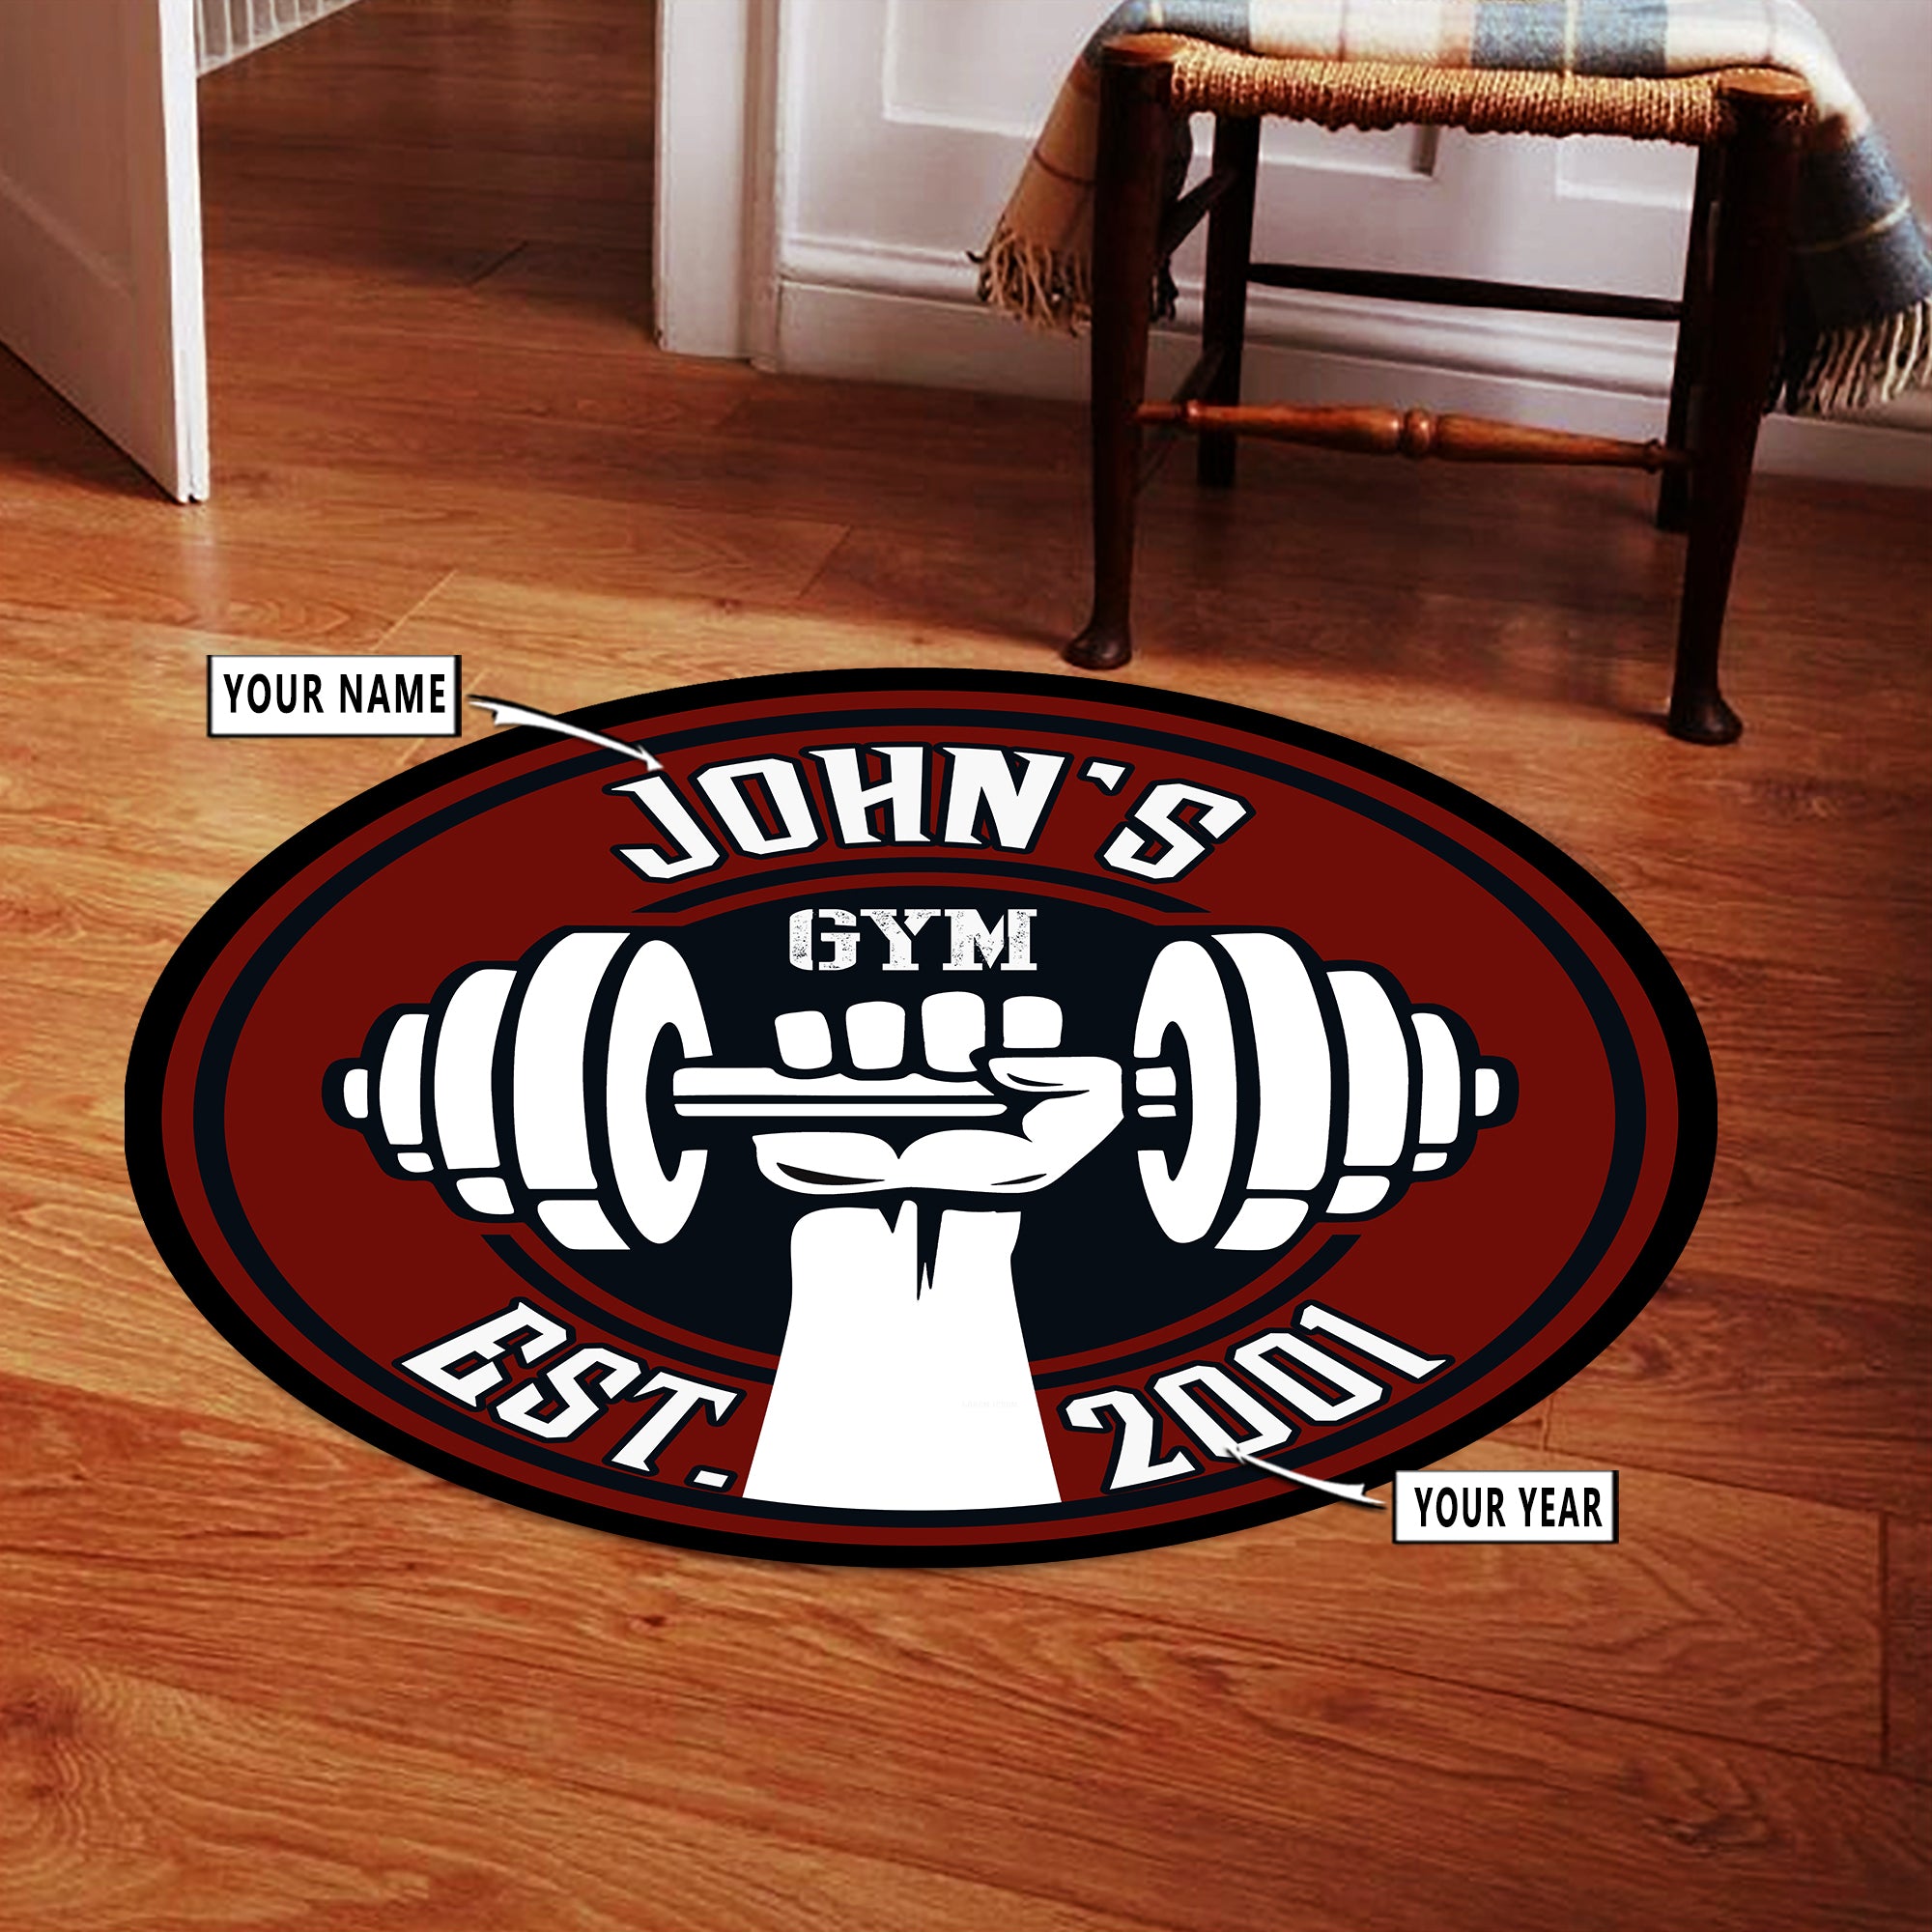 Personalized Gym Round Rug, Home Gym Decor, Bodybuilding gift